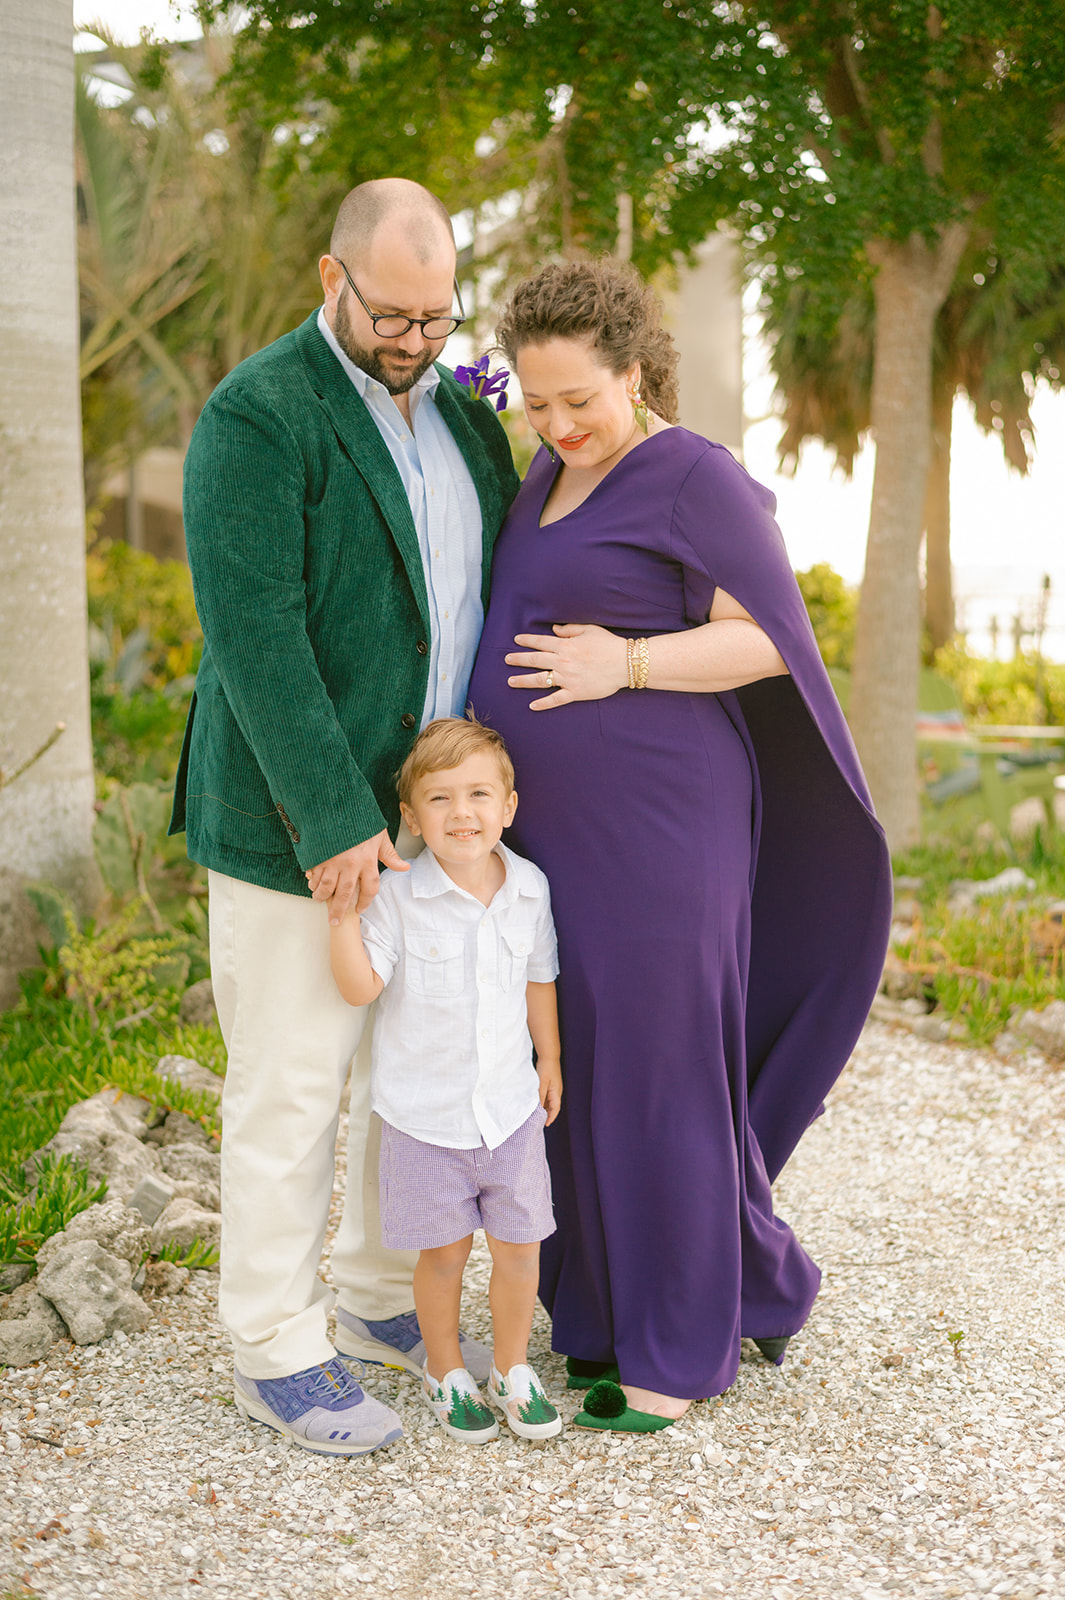 Joyful Maternity Photo Session in Naples Florida
